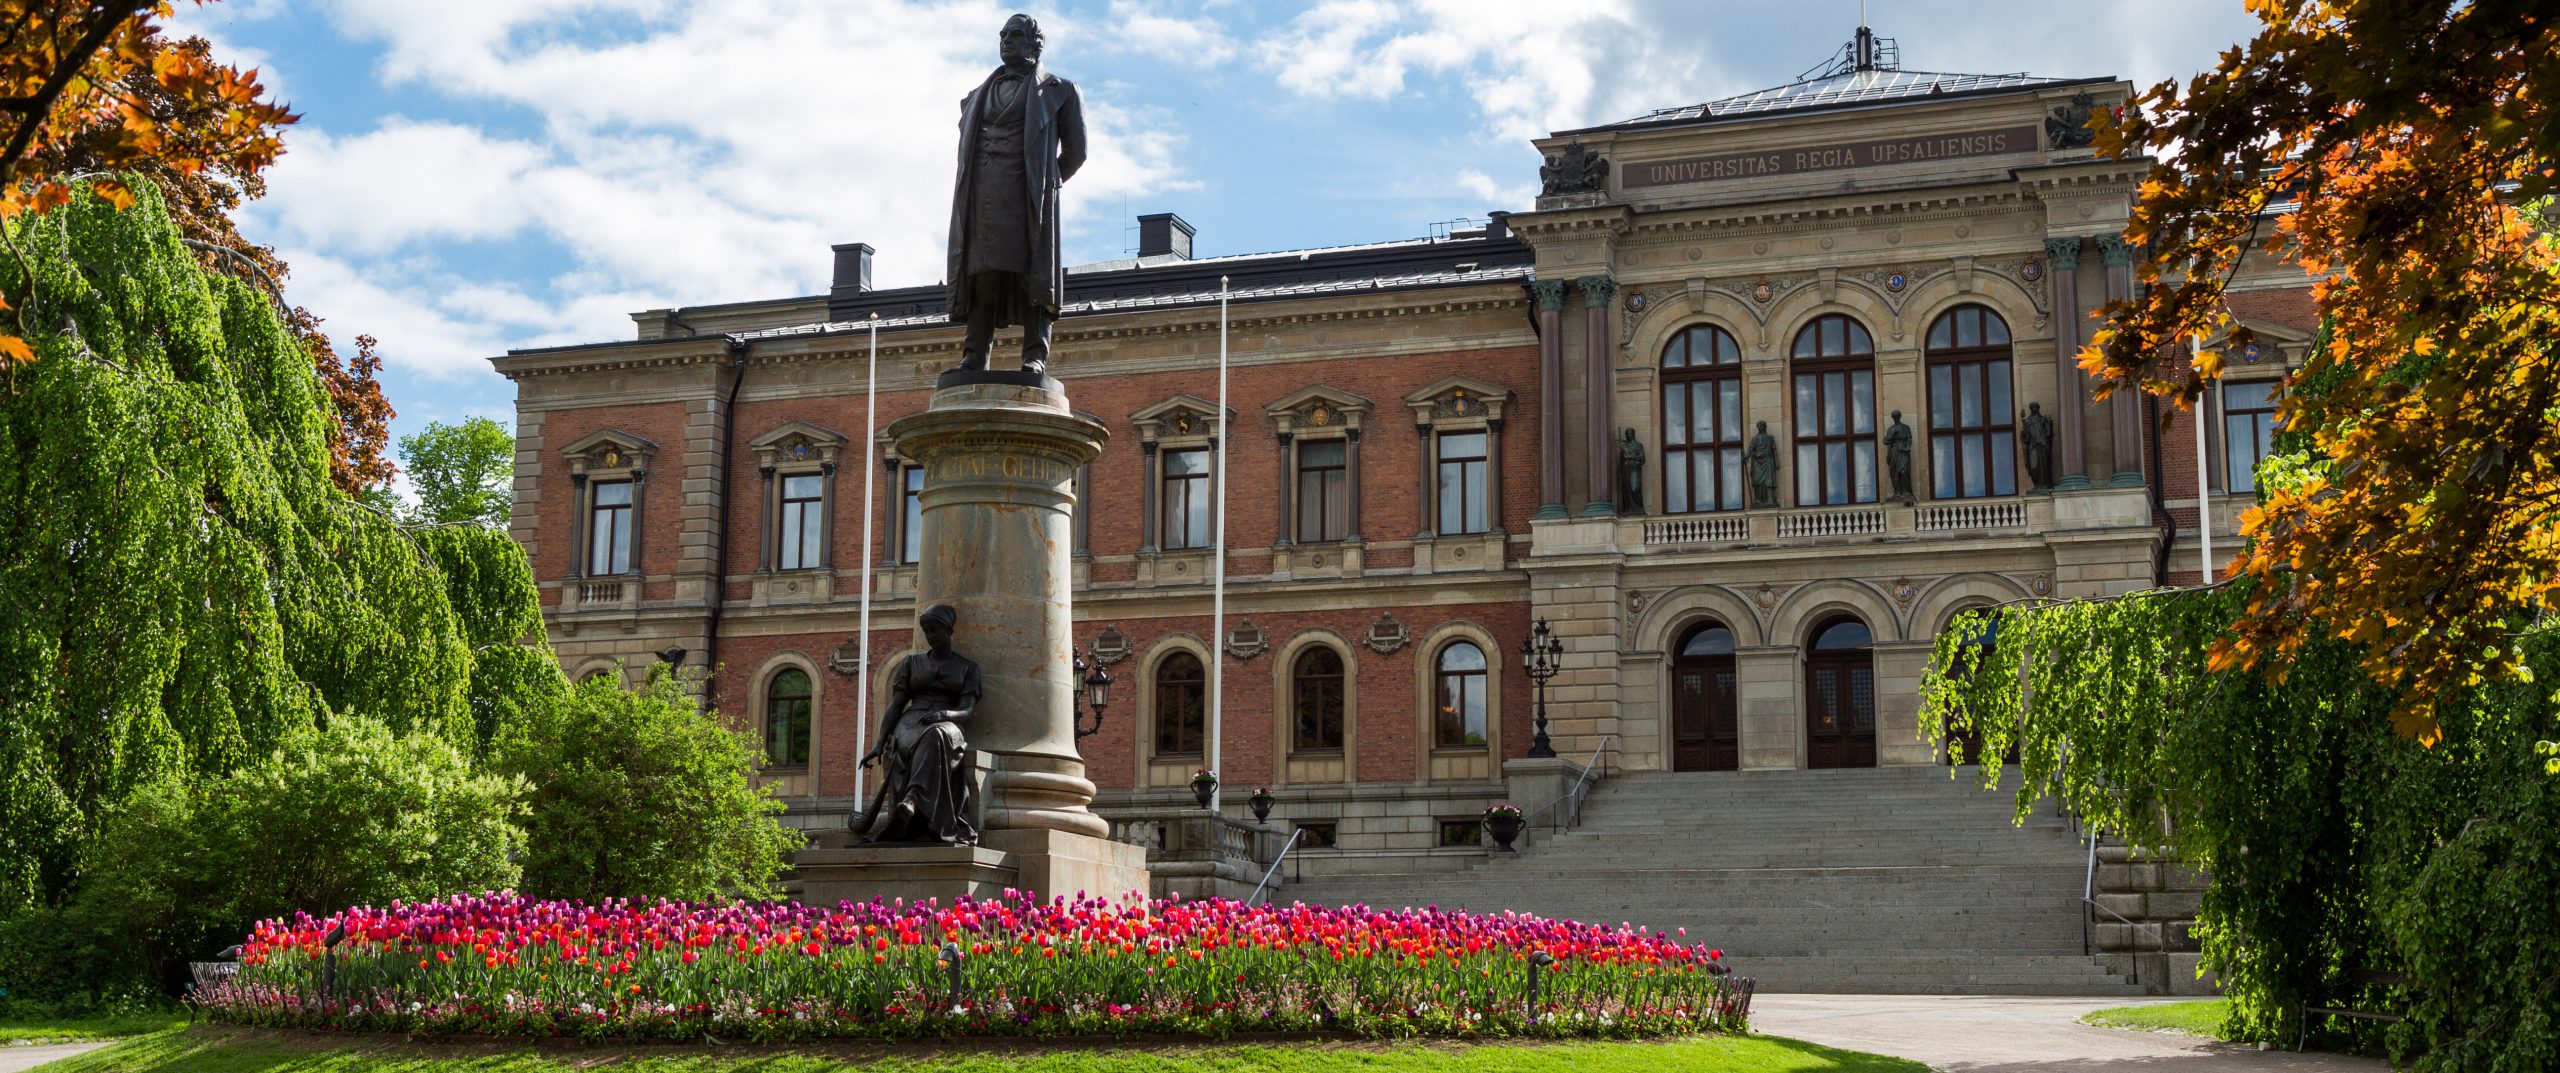 Uppsala University home of AIMday